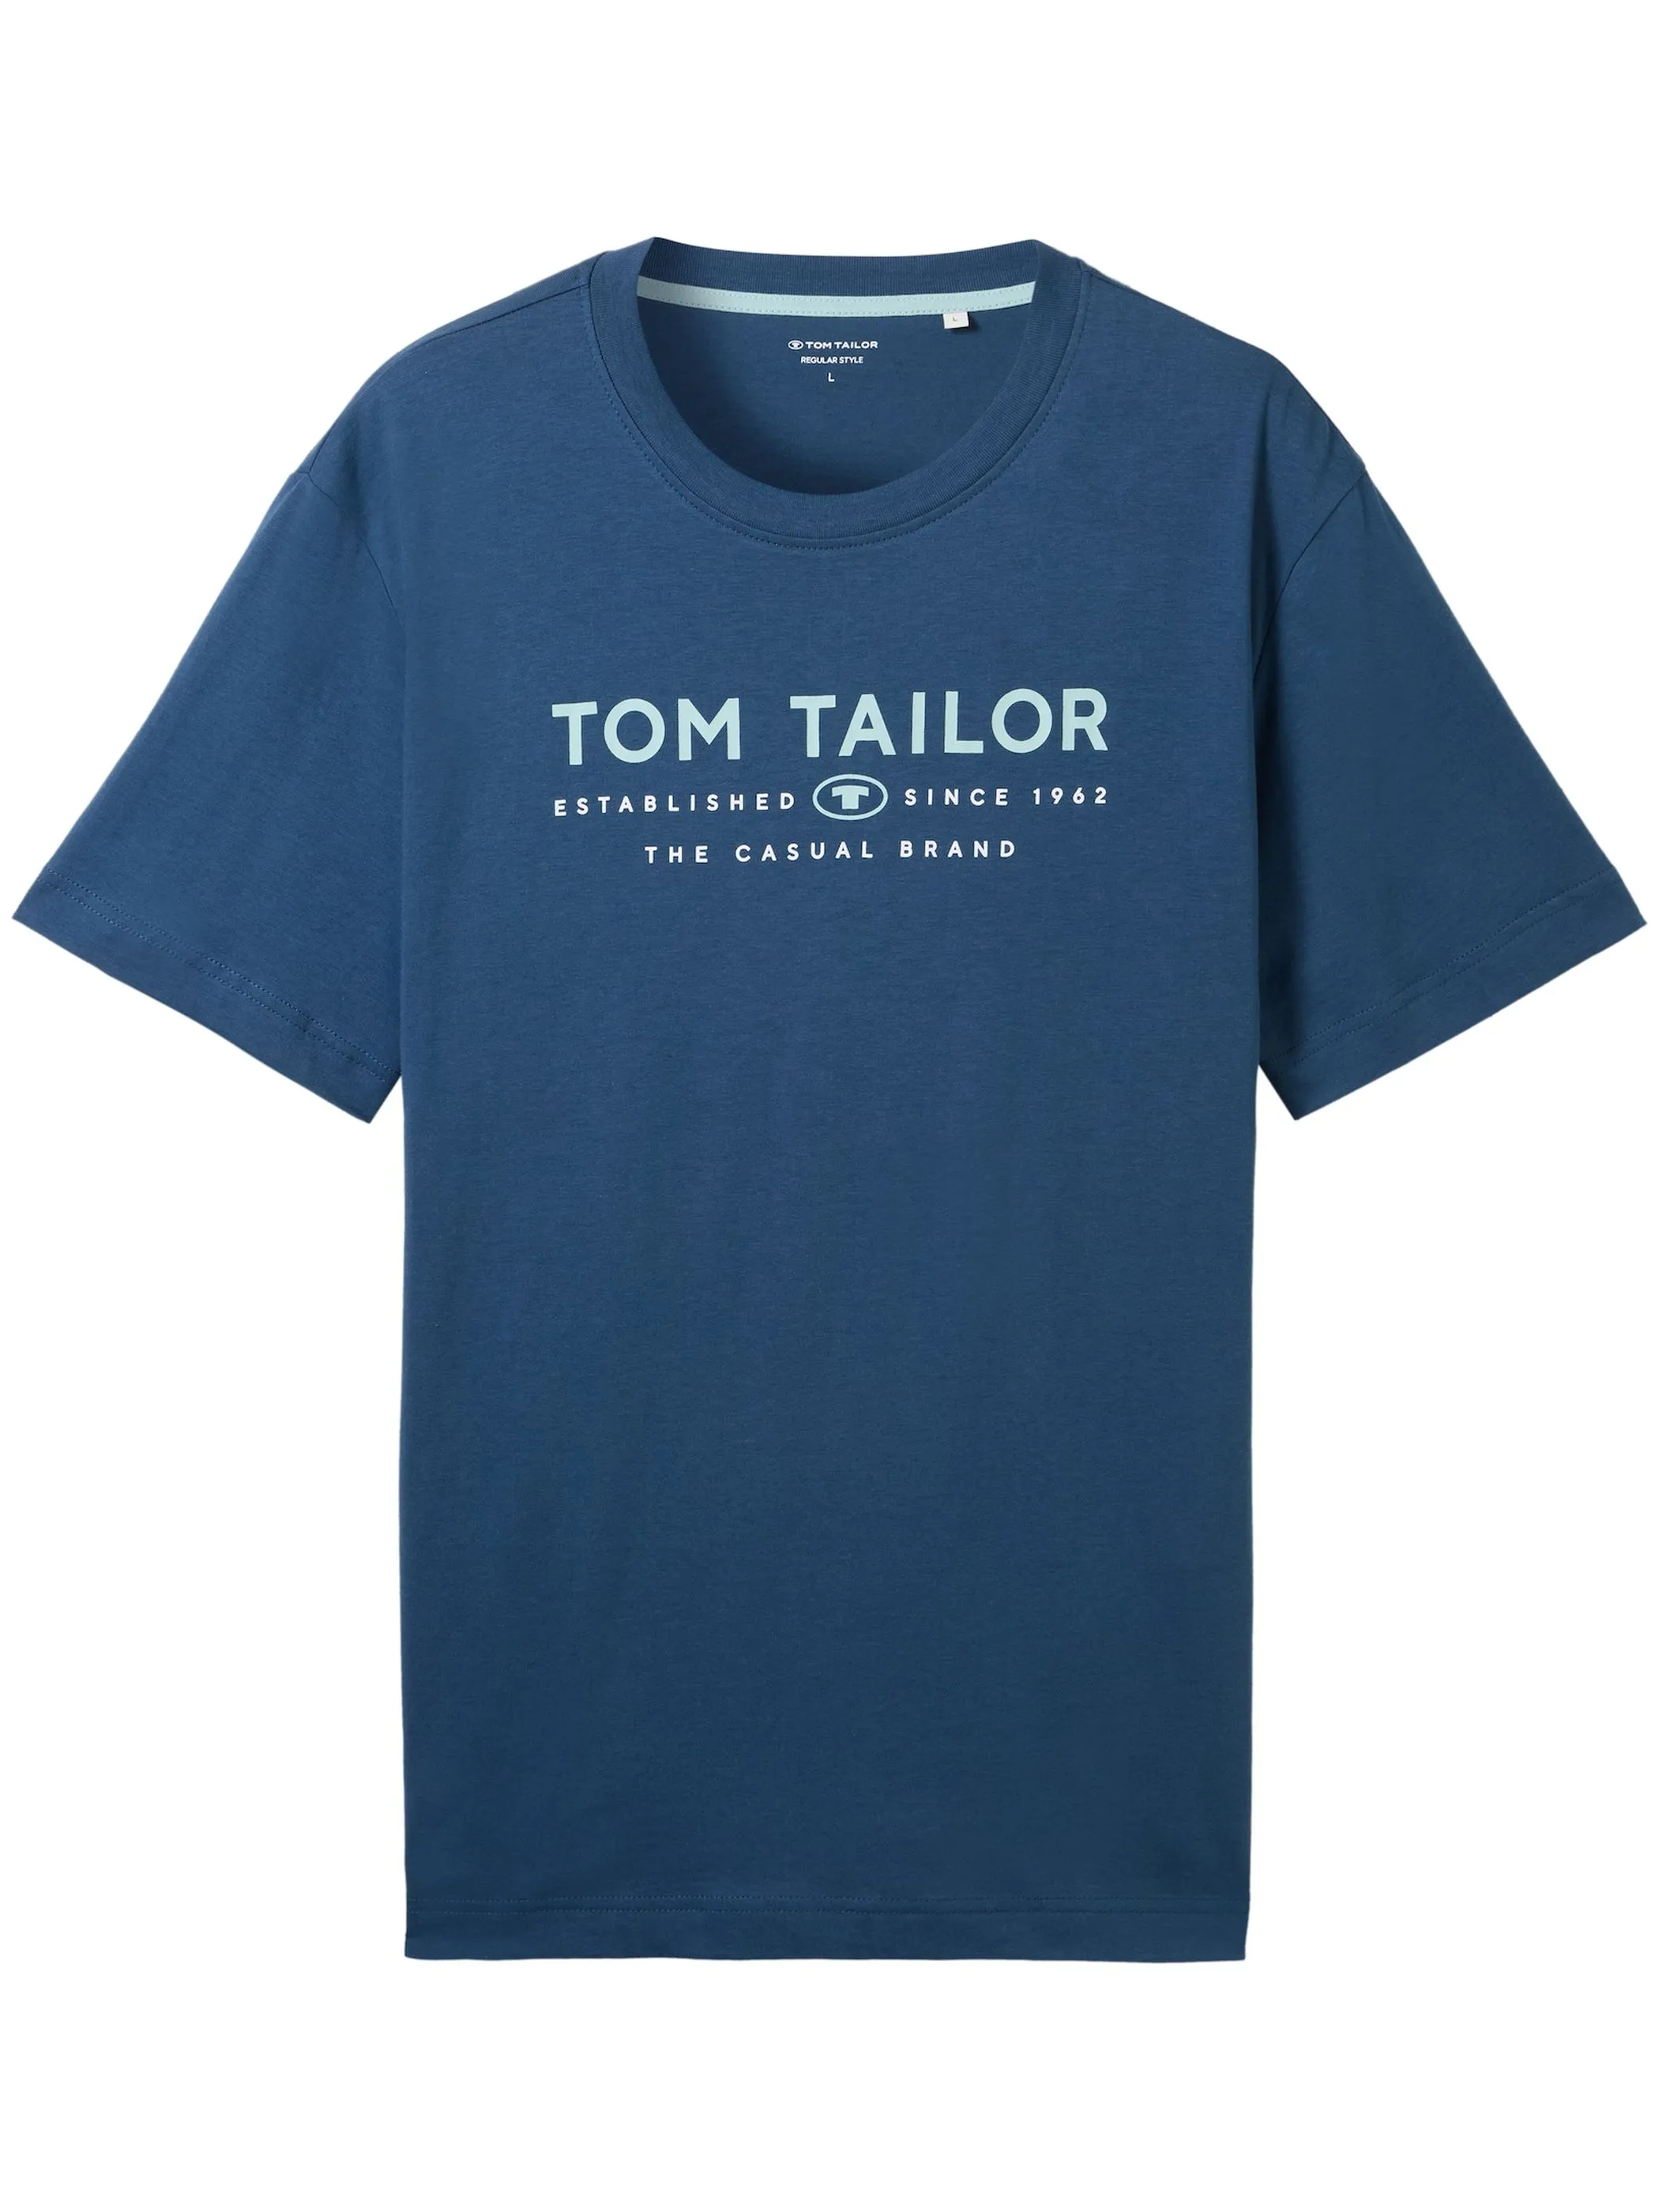 Tom Tailor 1043276 t-shirt with print Blau 898849 26779 1